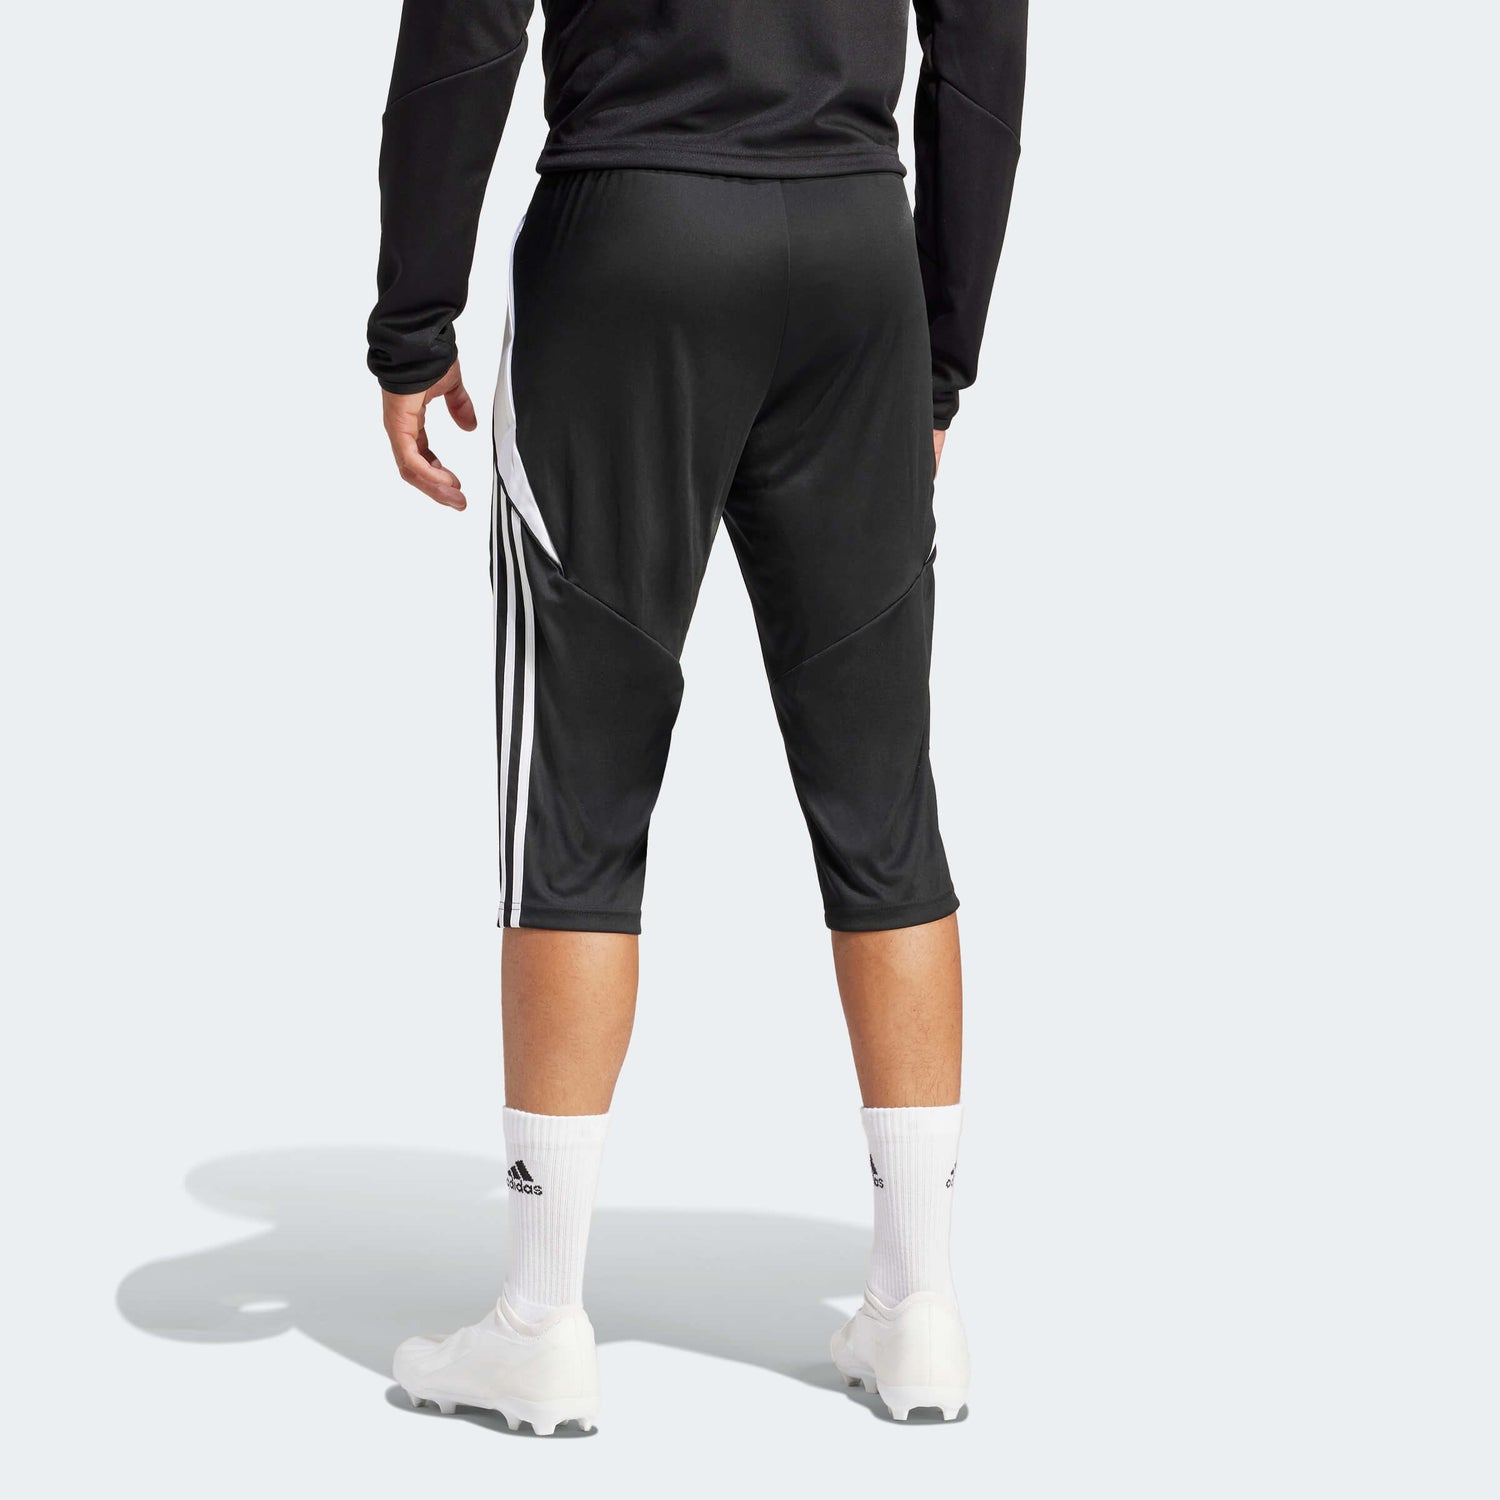 Buy adidas Men's Core 15 Three-Quarter Pants at Ubuy Algeria